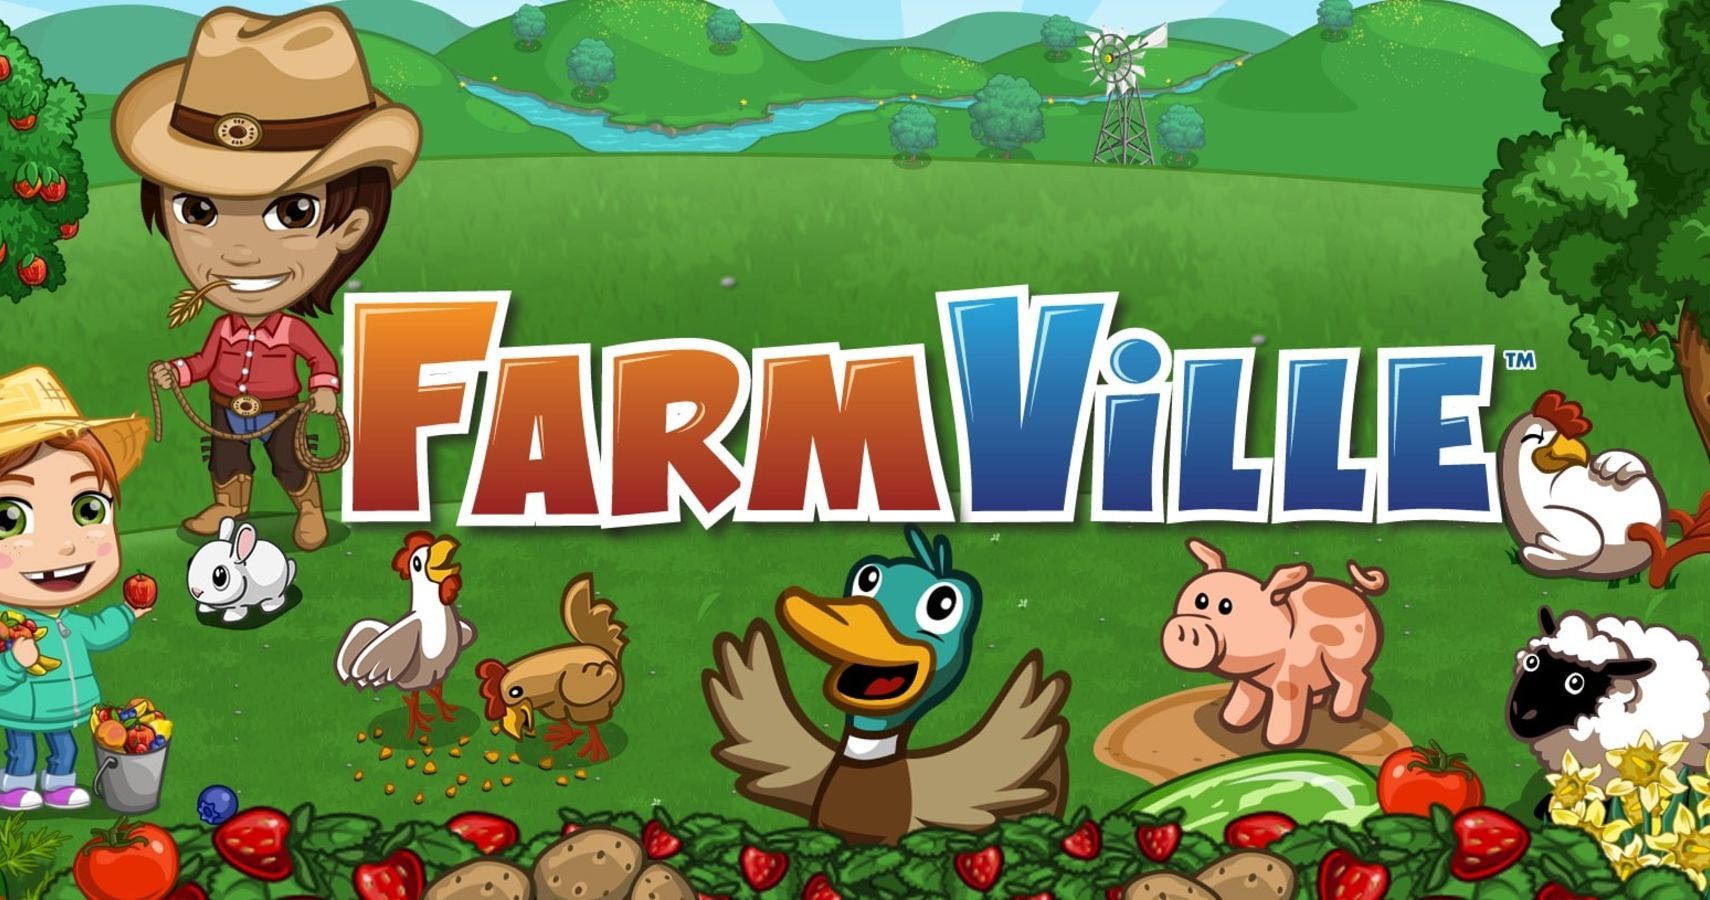 FarmVille Officially Shutting Down Today